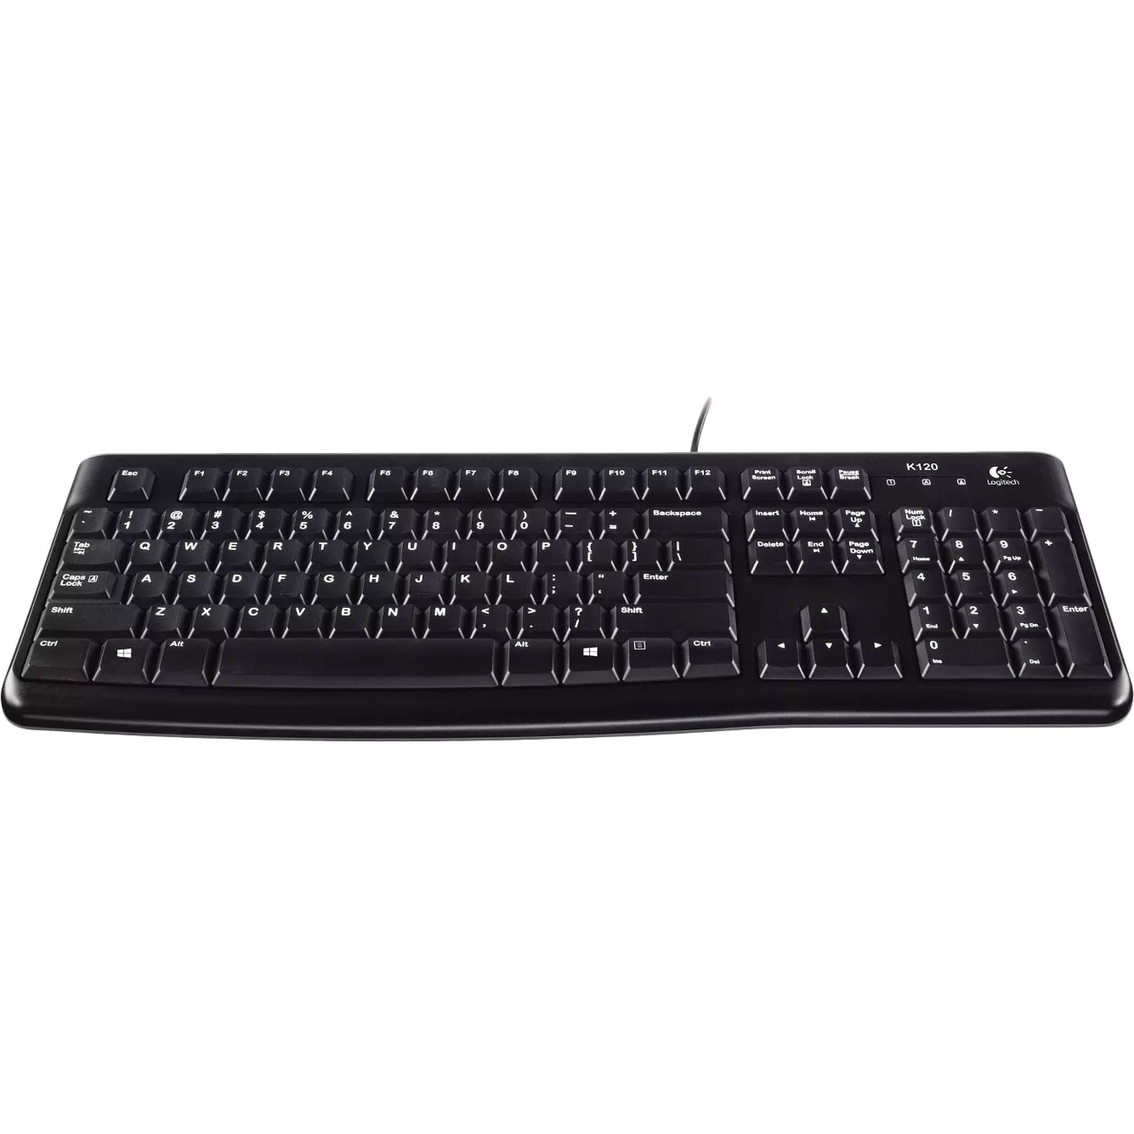 Logitech Keyboard K120 - Image 2 of 7